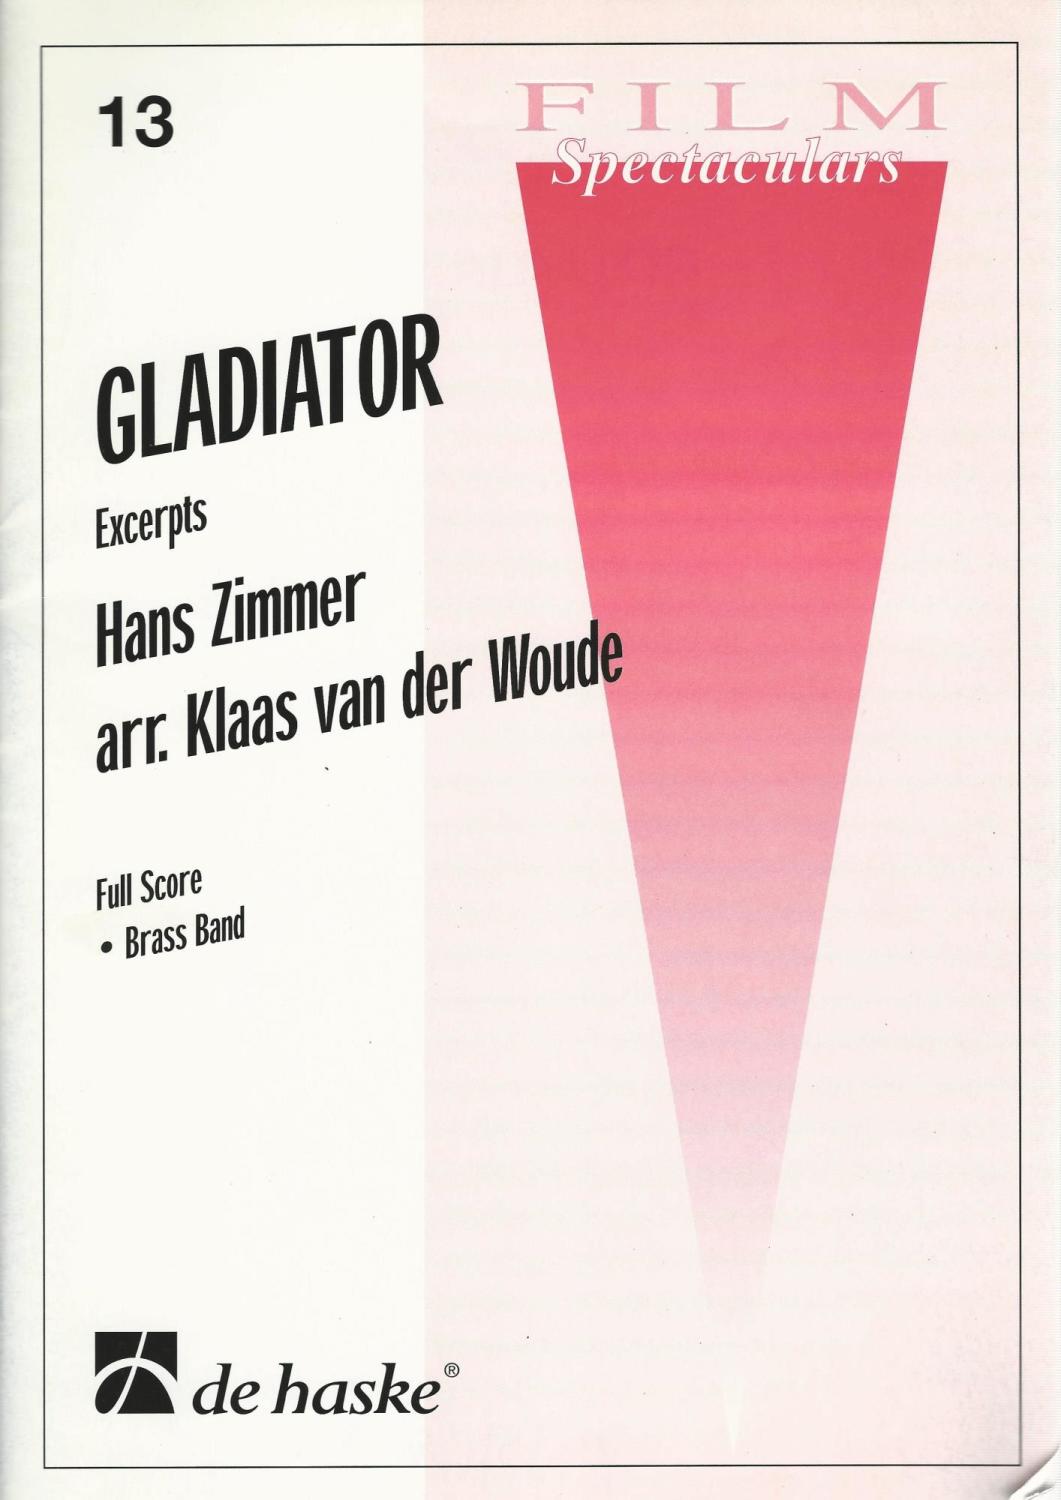 Gladiator Excerpts for Brass Band (Score Only) - Hans Zimmer, arr. Klaas va